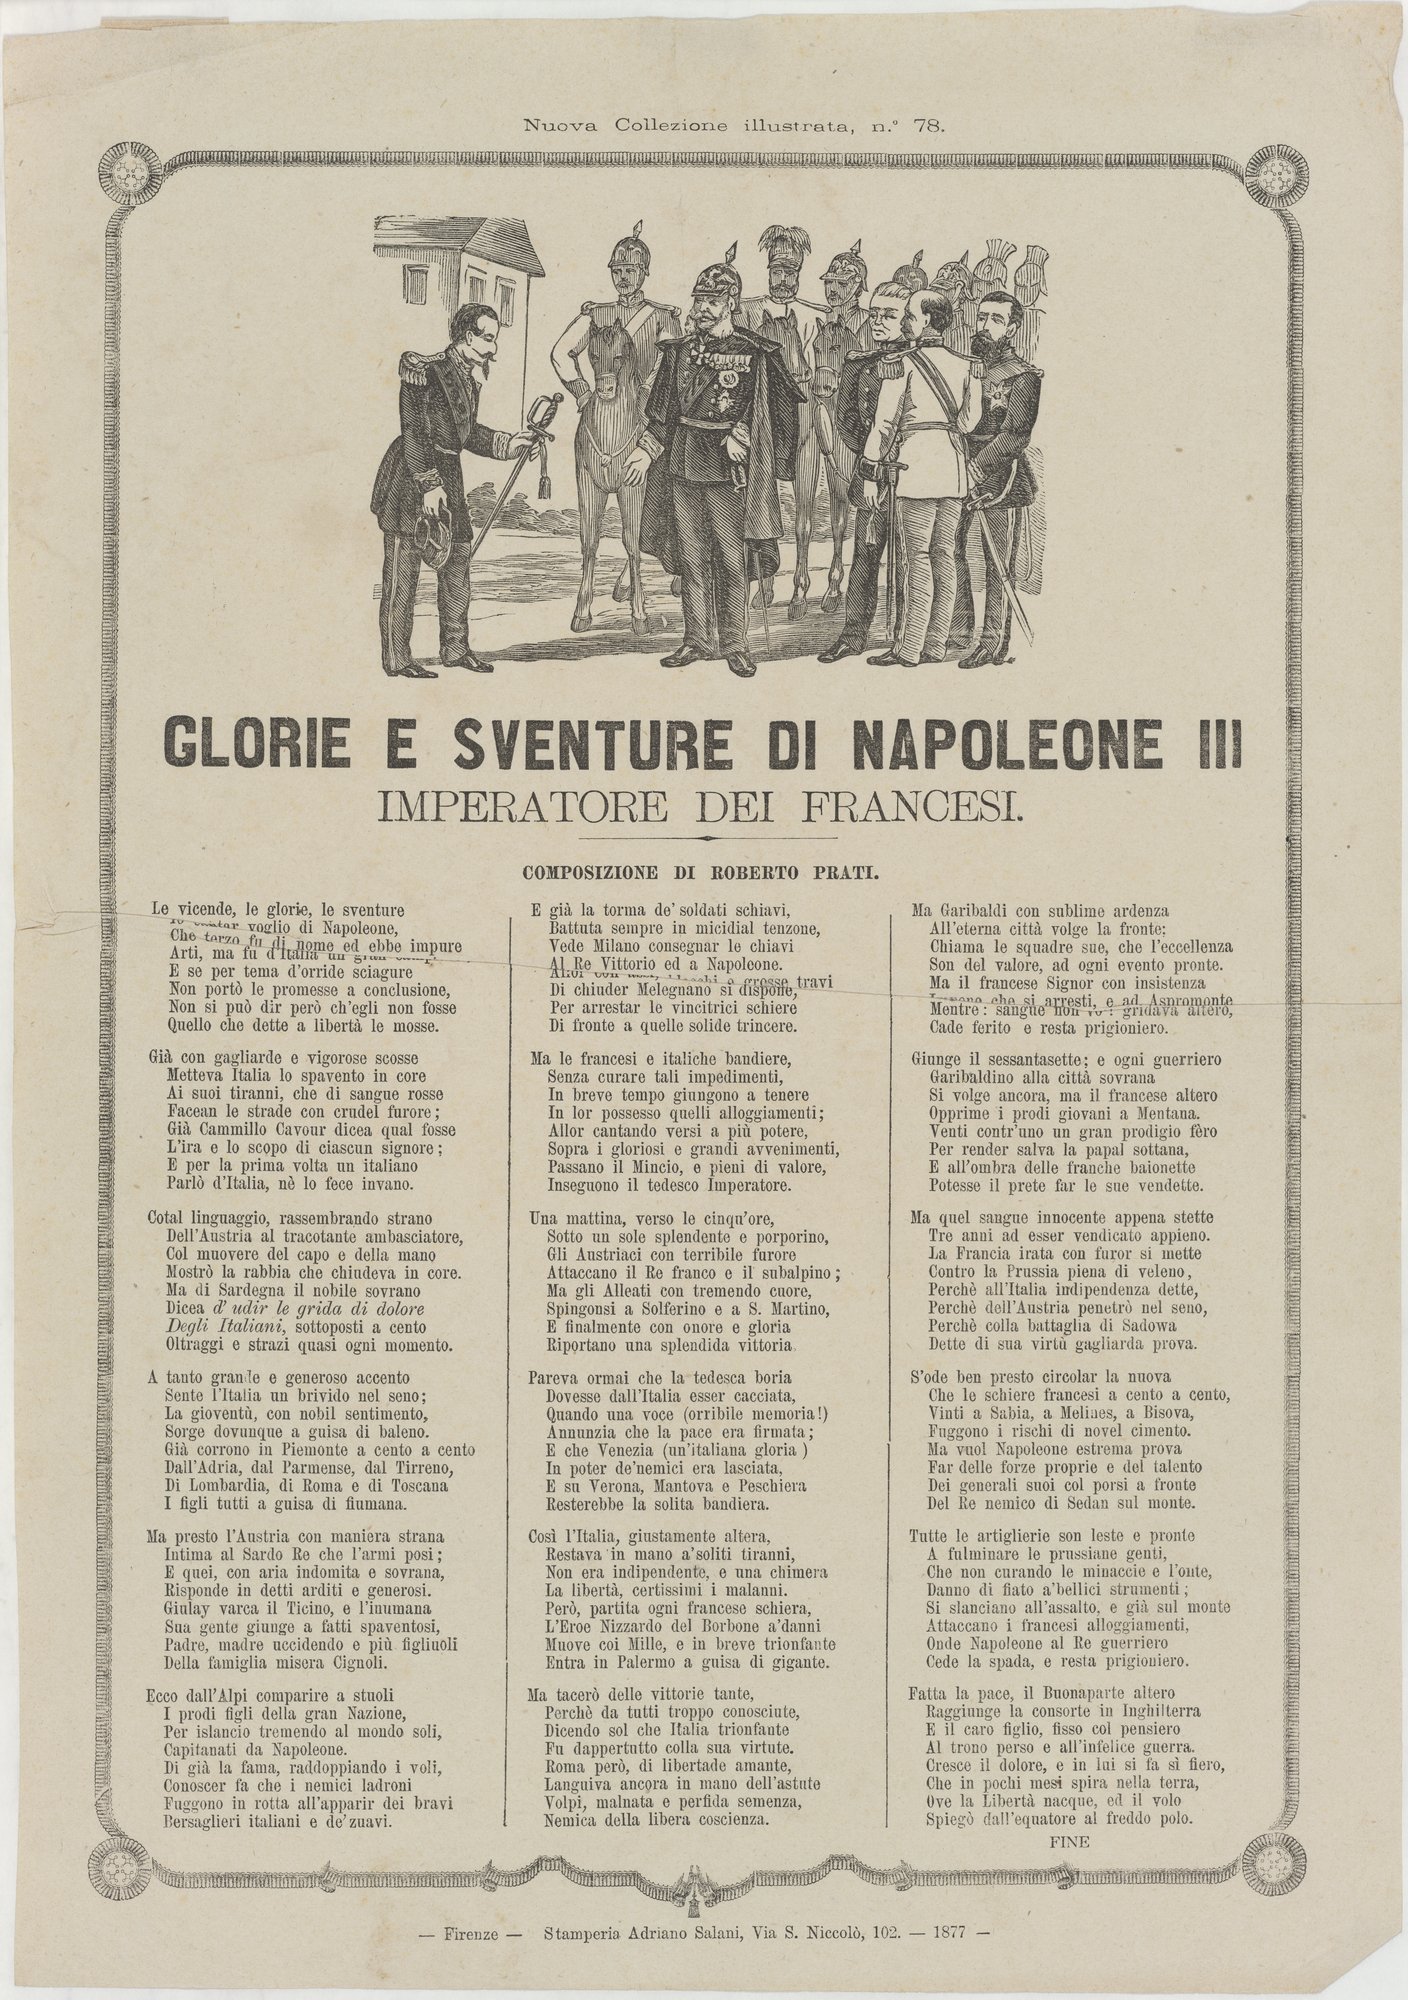 GLORIE E SVENTURE DI NAPOLEONE III/ IMPERATORE DEI FRANCESI. (Kulturstiftung Sachsen-Anhalt Public Domain Mark)